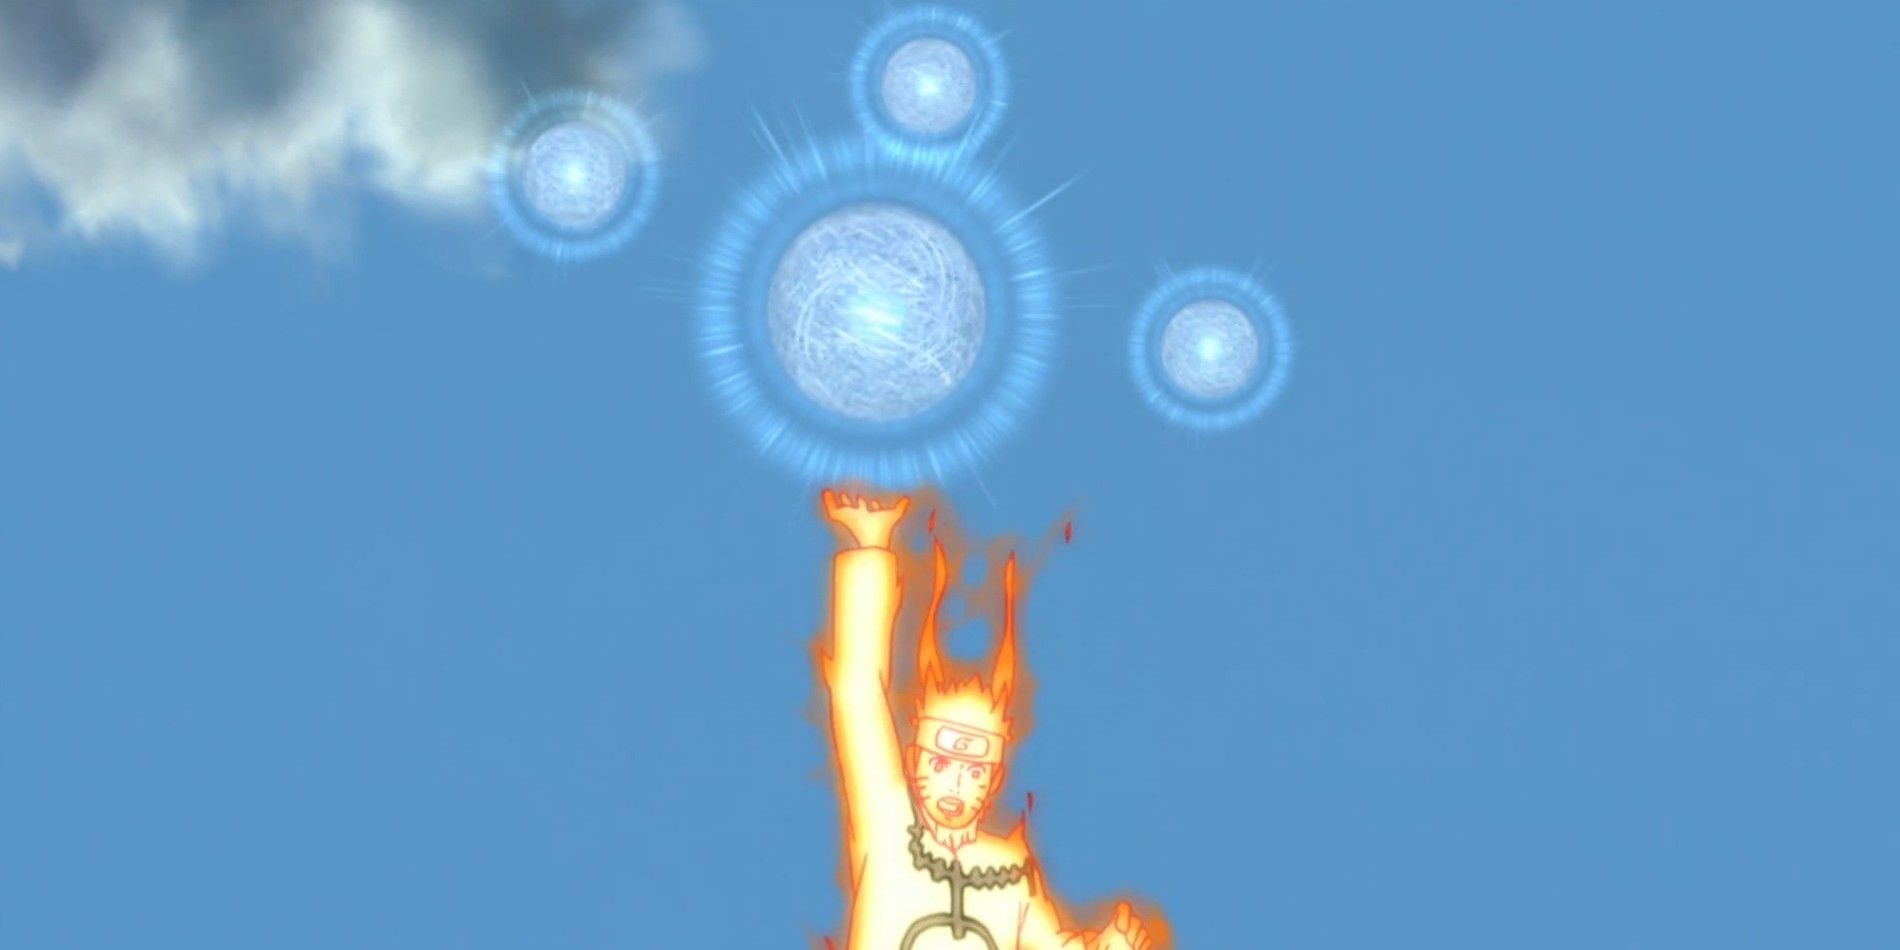 Naruto Uzumaki from Naruto Shippūden, wearing his Sage cloak and about to perform his Planetary Rasengan